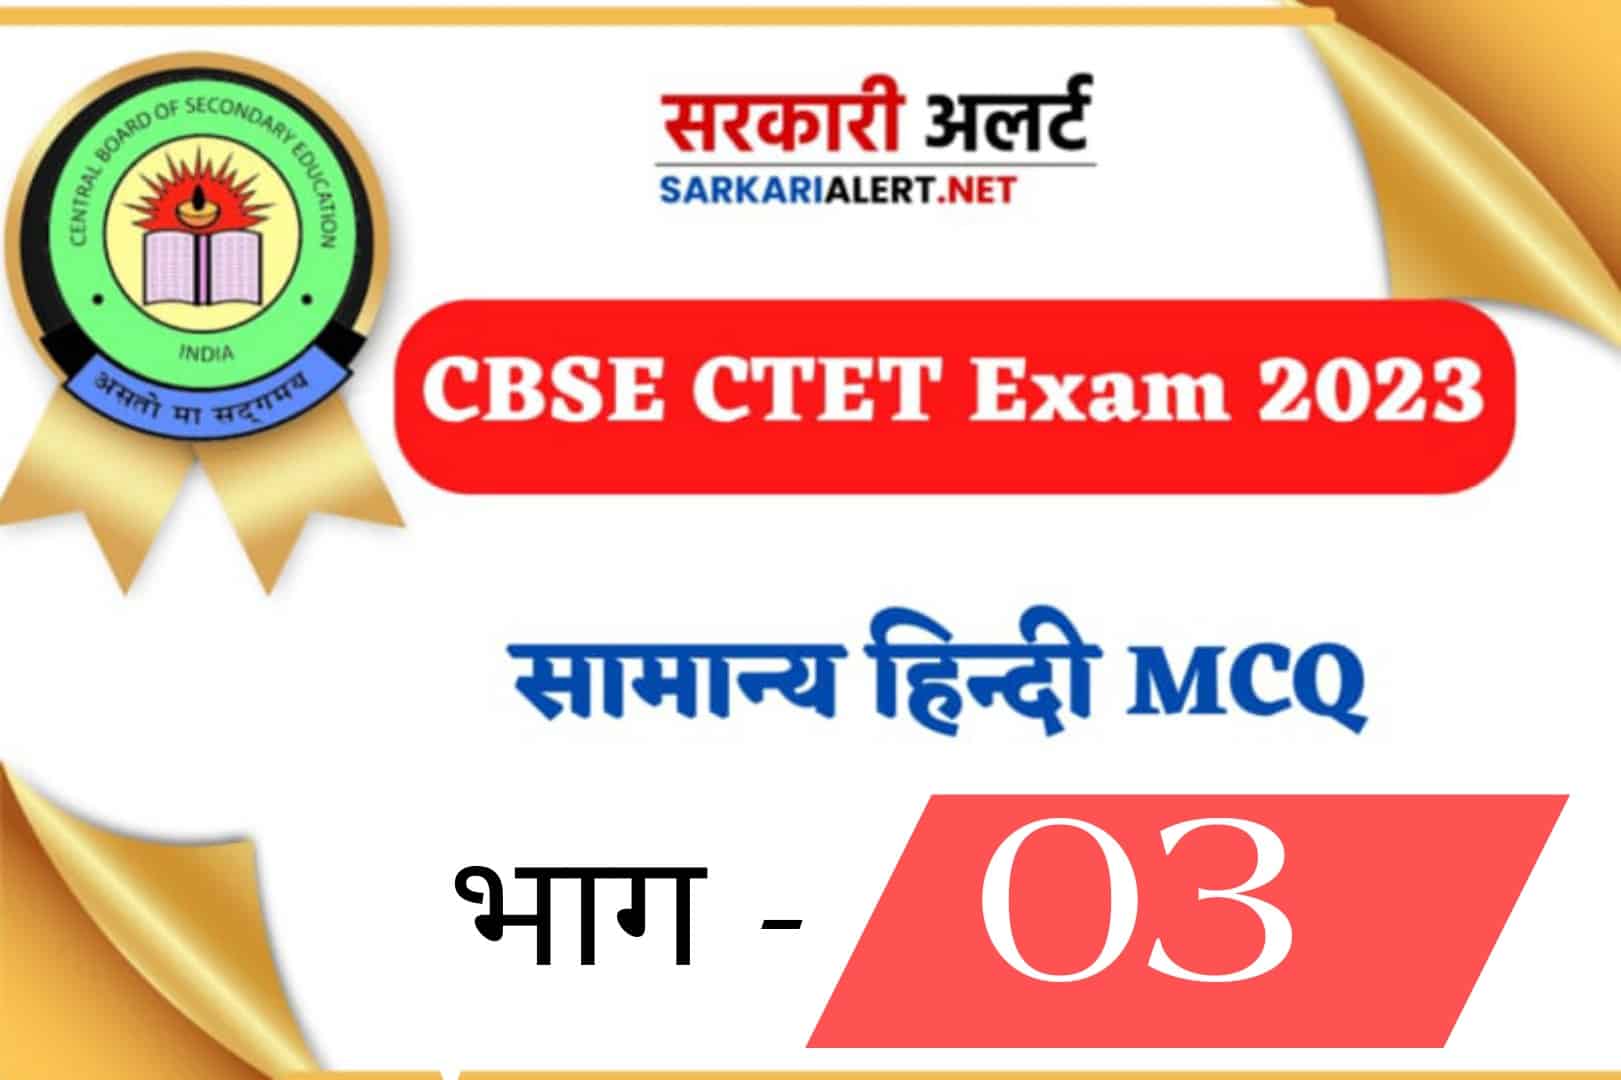 CBSE CTET Exam 2023 Hindi MCQ - 03 | सामान्य हिन्दी के महत्वपूर्ण 30 प्रश्न